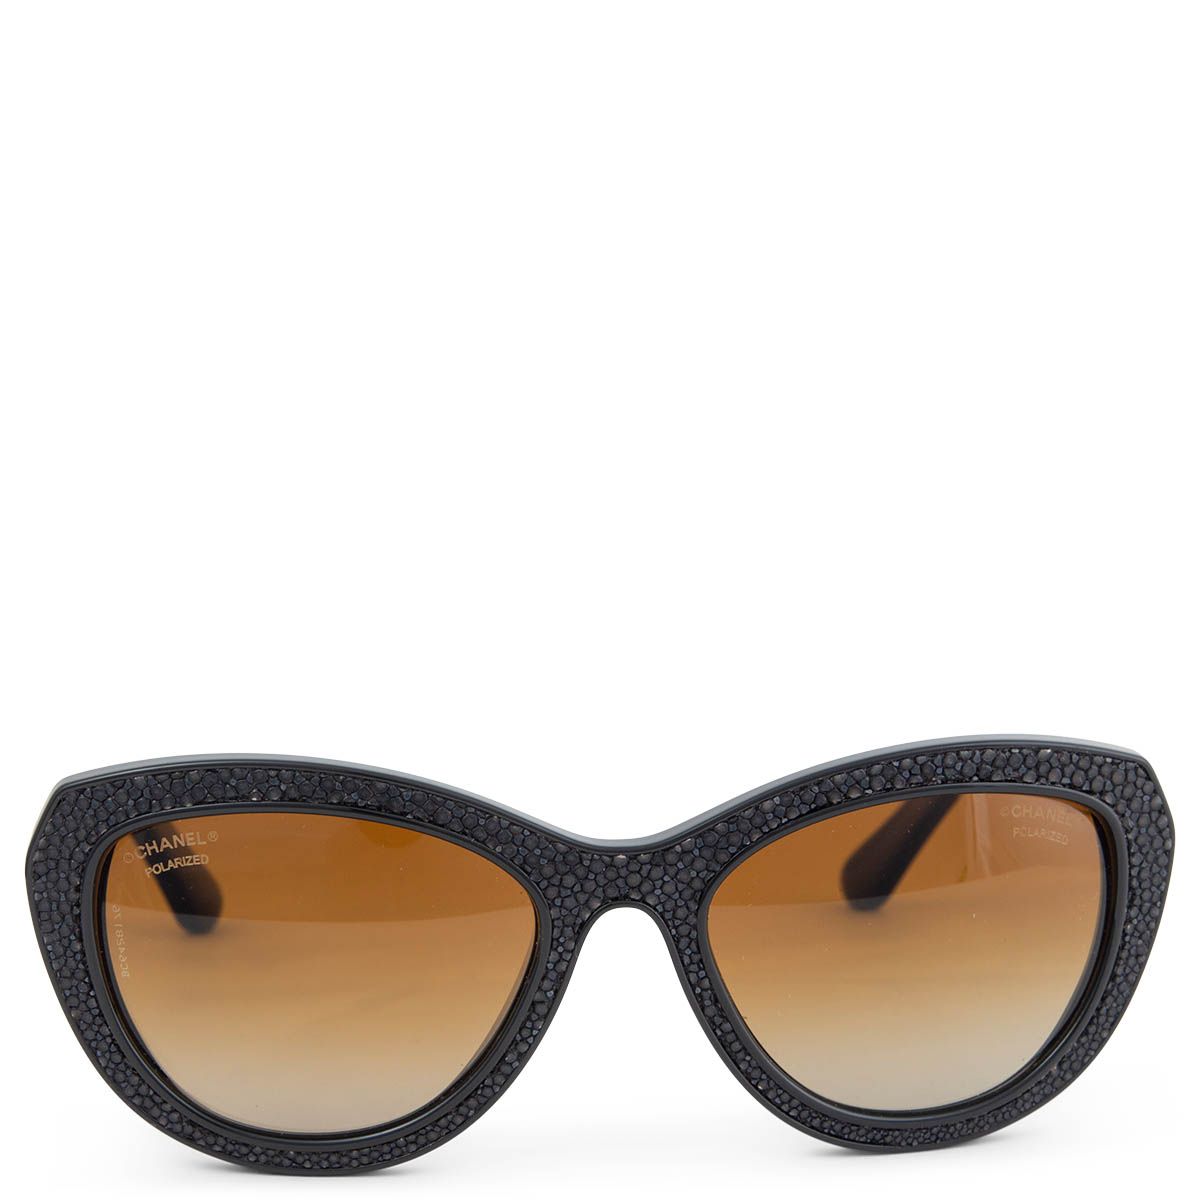 CHANEL Black Gold Tortoise Squared Sunglasses wcase  ReturnStyle